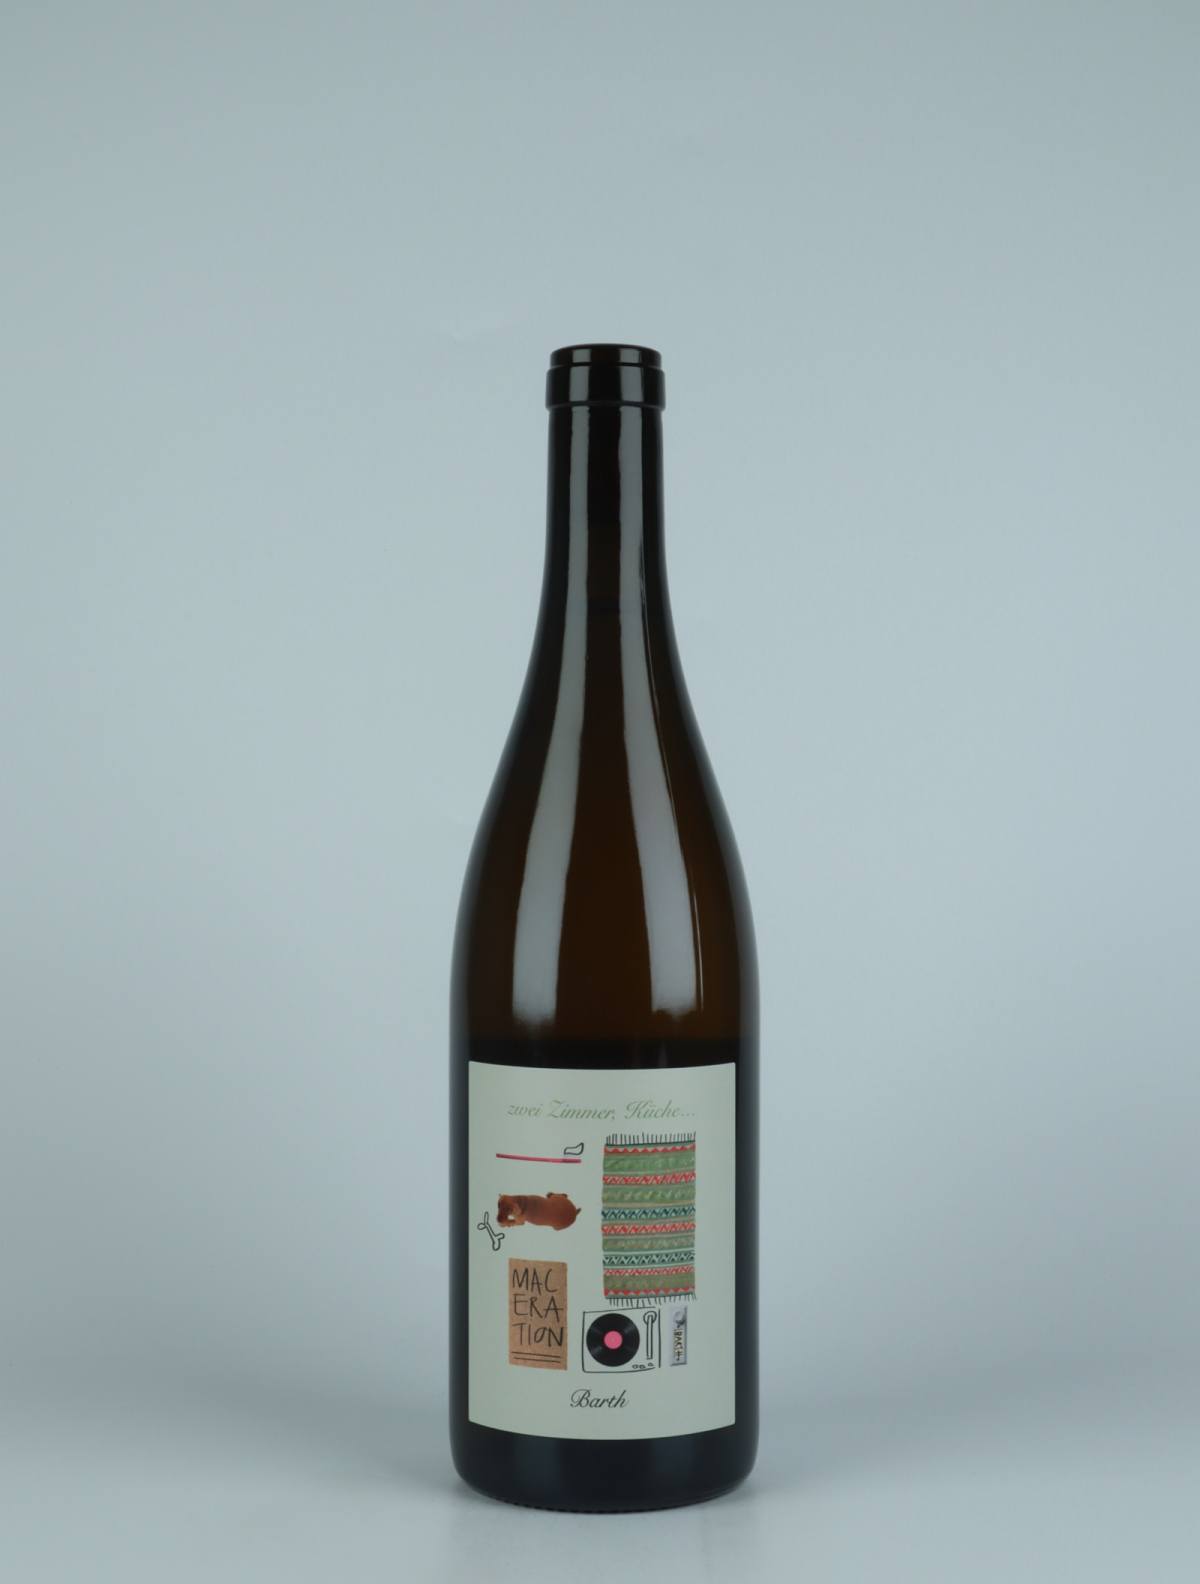 En flaske N.V. Zwei Zimmer, Küche, Barth - Maceration #2 Orange vin fra Christopher Barth, Rheinhessen i Tyskland